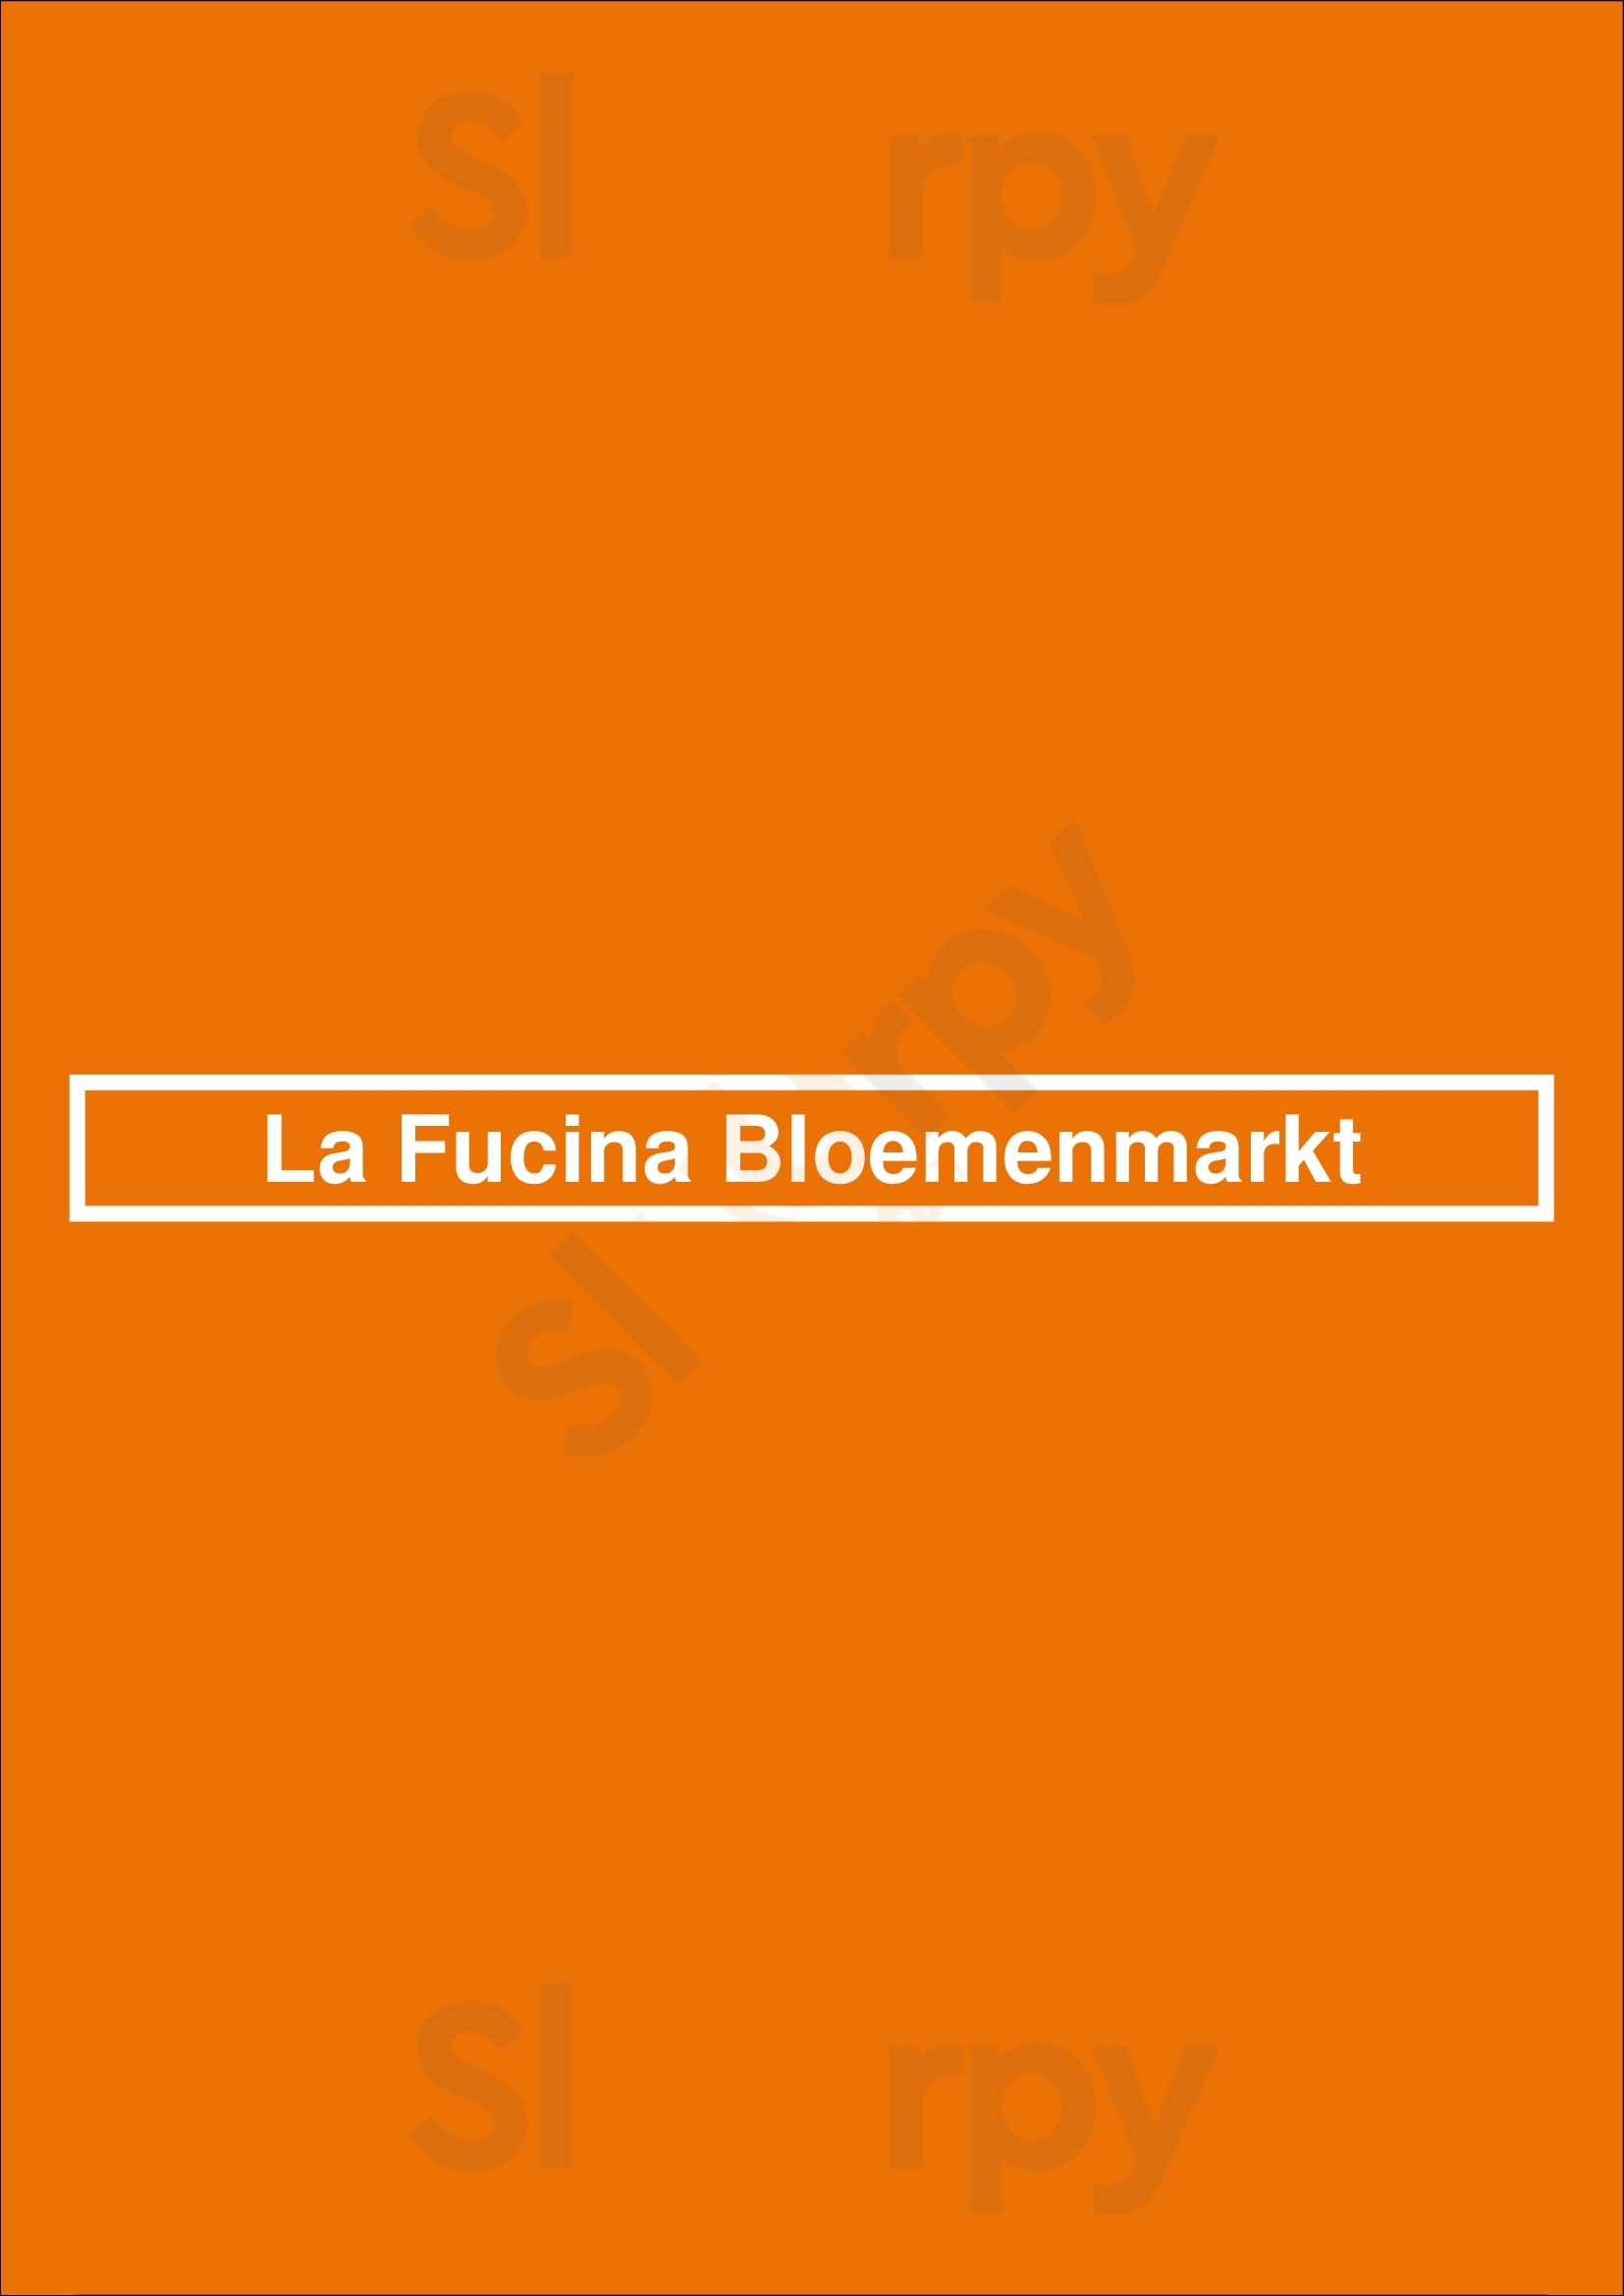 La Fucina Bloemenmarkt Amsterdam Menu - 1